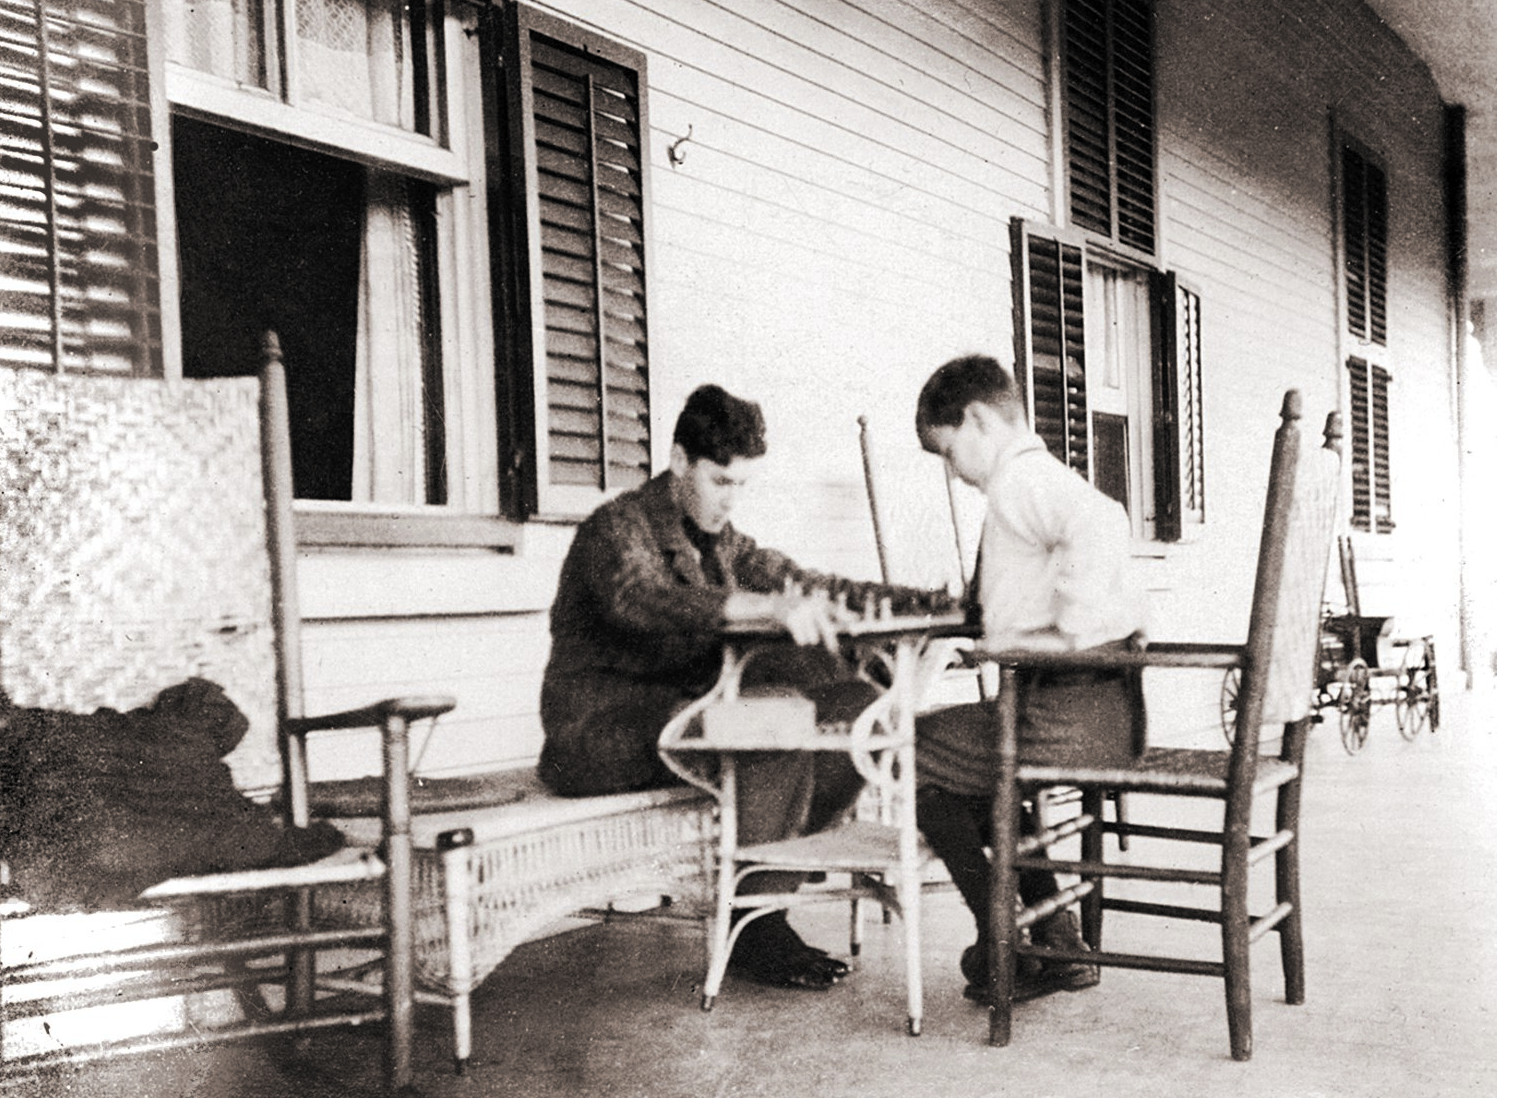 Two well-dressed teenage boys play chess on a veranda.